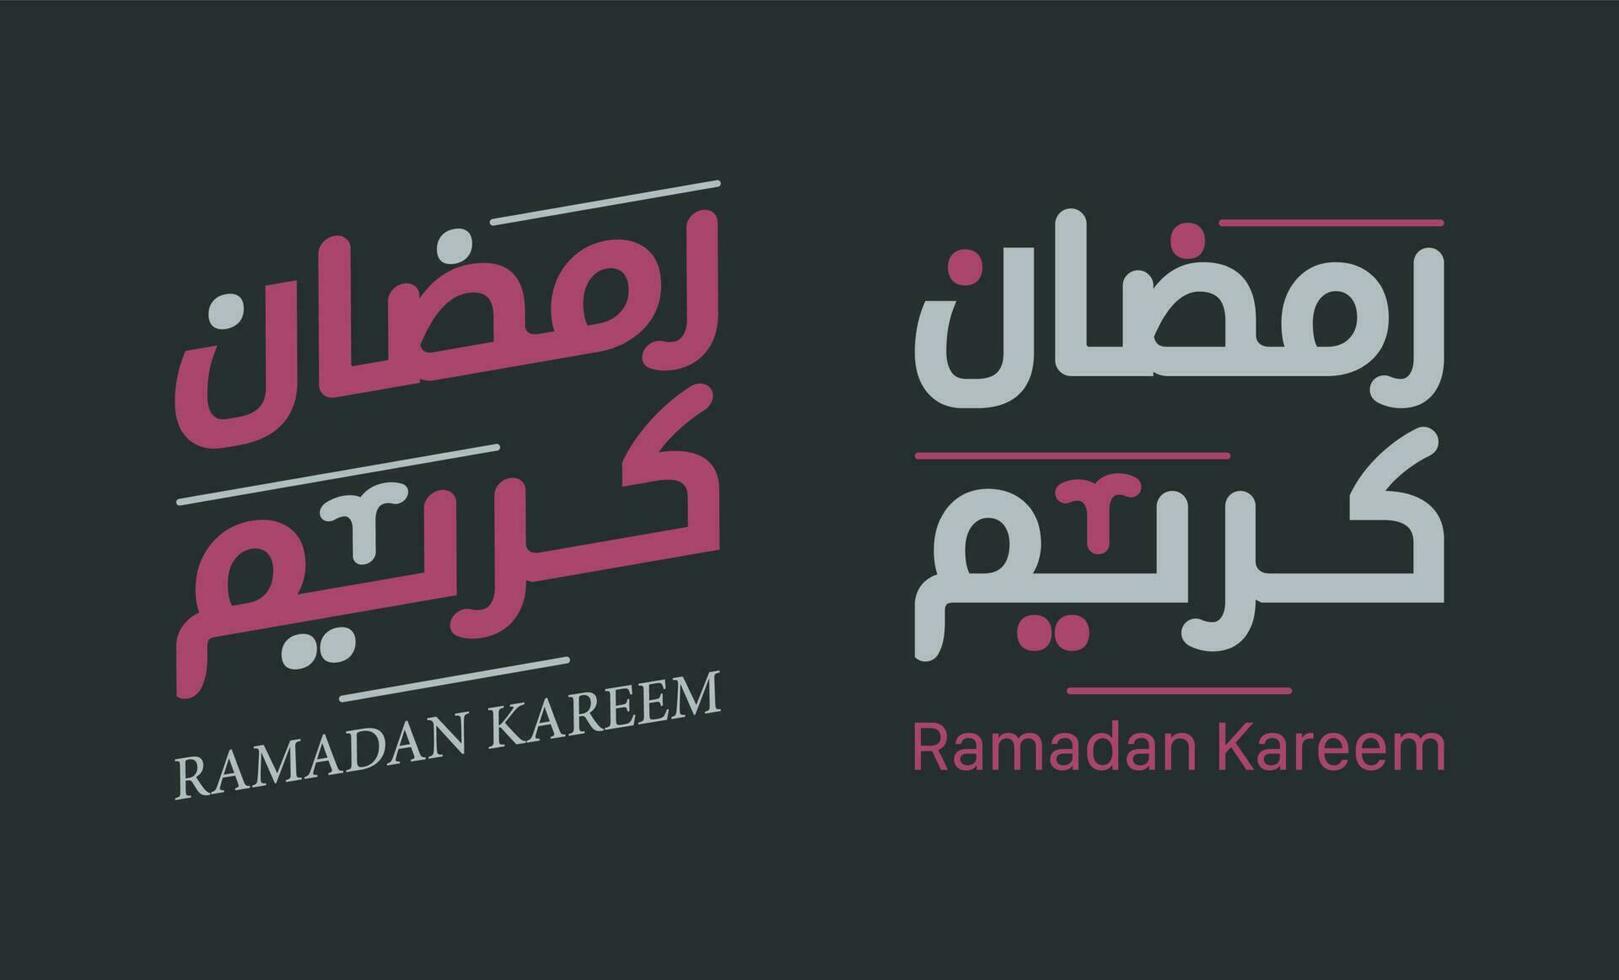 Ramadan Kareem Greeting Calligraphy Ramadhan Mubarak Translated Happy and Holy Ramadan The month of fasting for Muslims Arabic Calligraphy logo for Ramadan in Arabic type vector